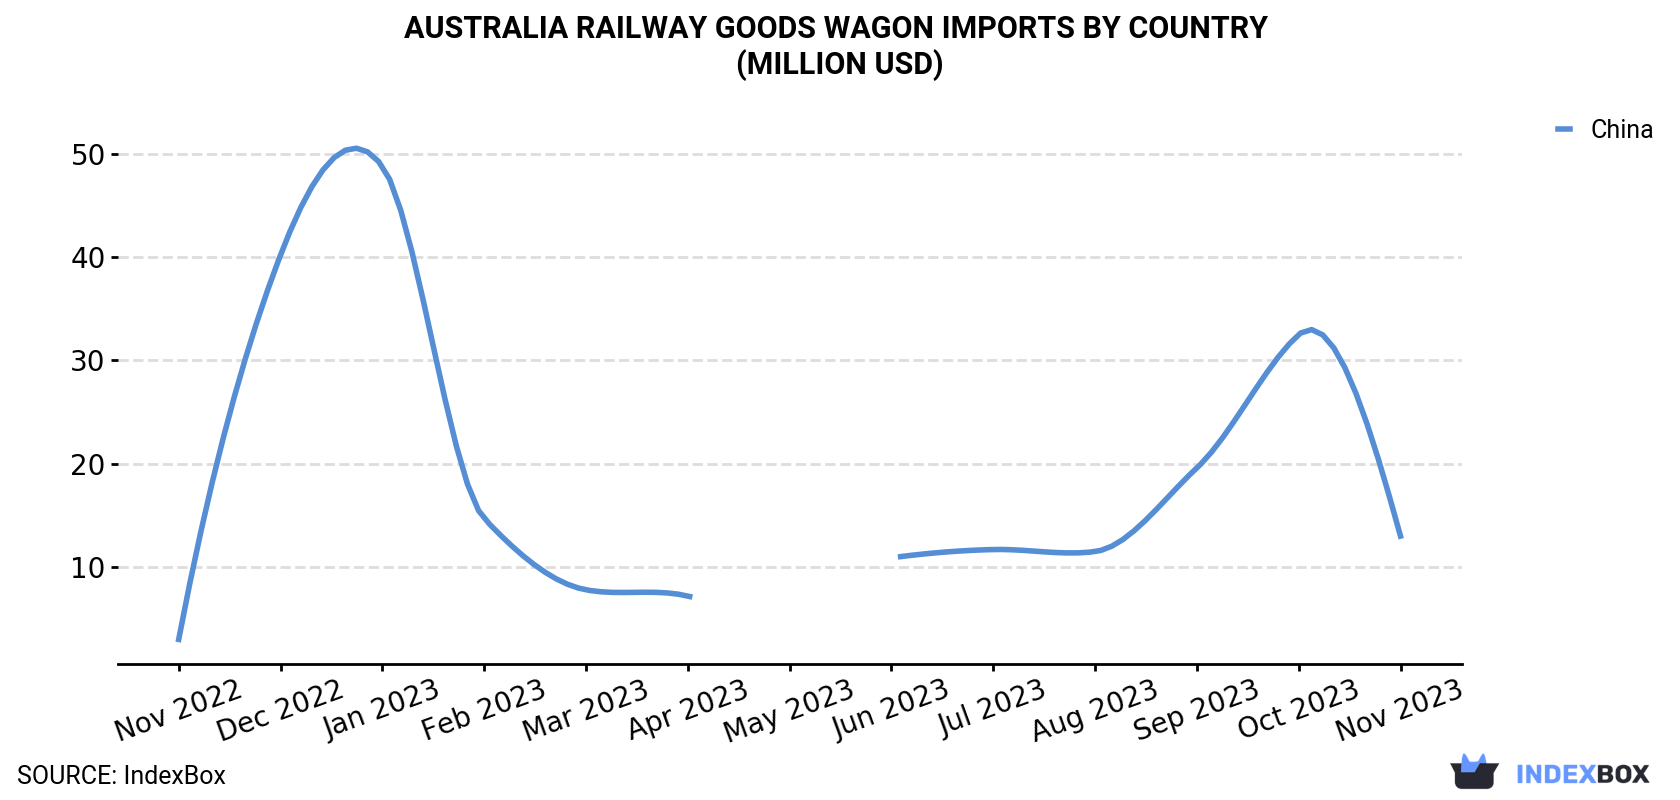 Australia Railway Goods Wagon Imports By Country (Million USD)